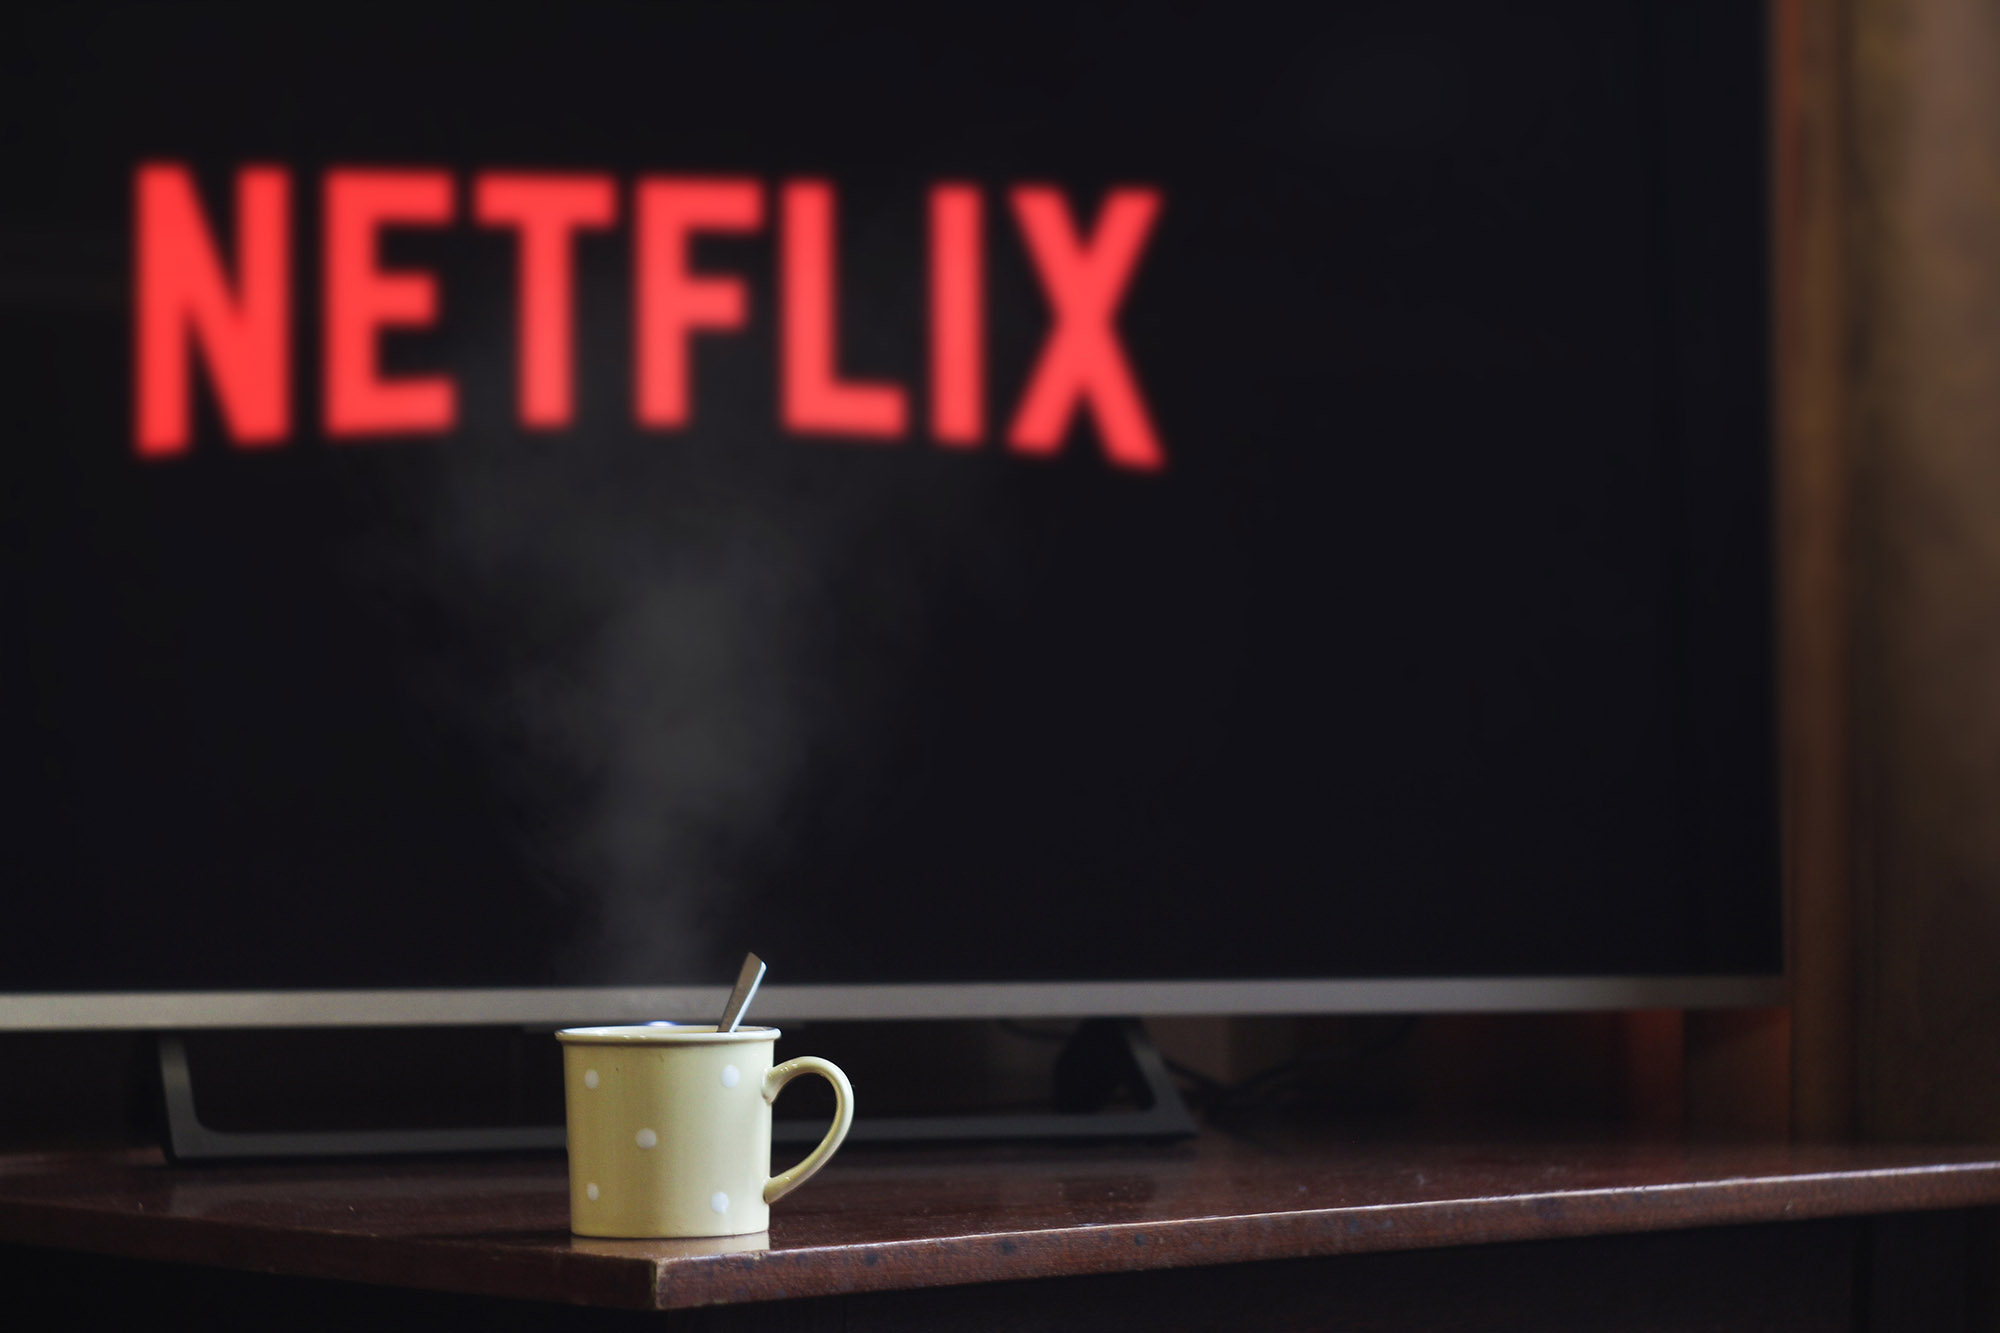 Photo of television showing Netflix logo behind a steaming beverage mug